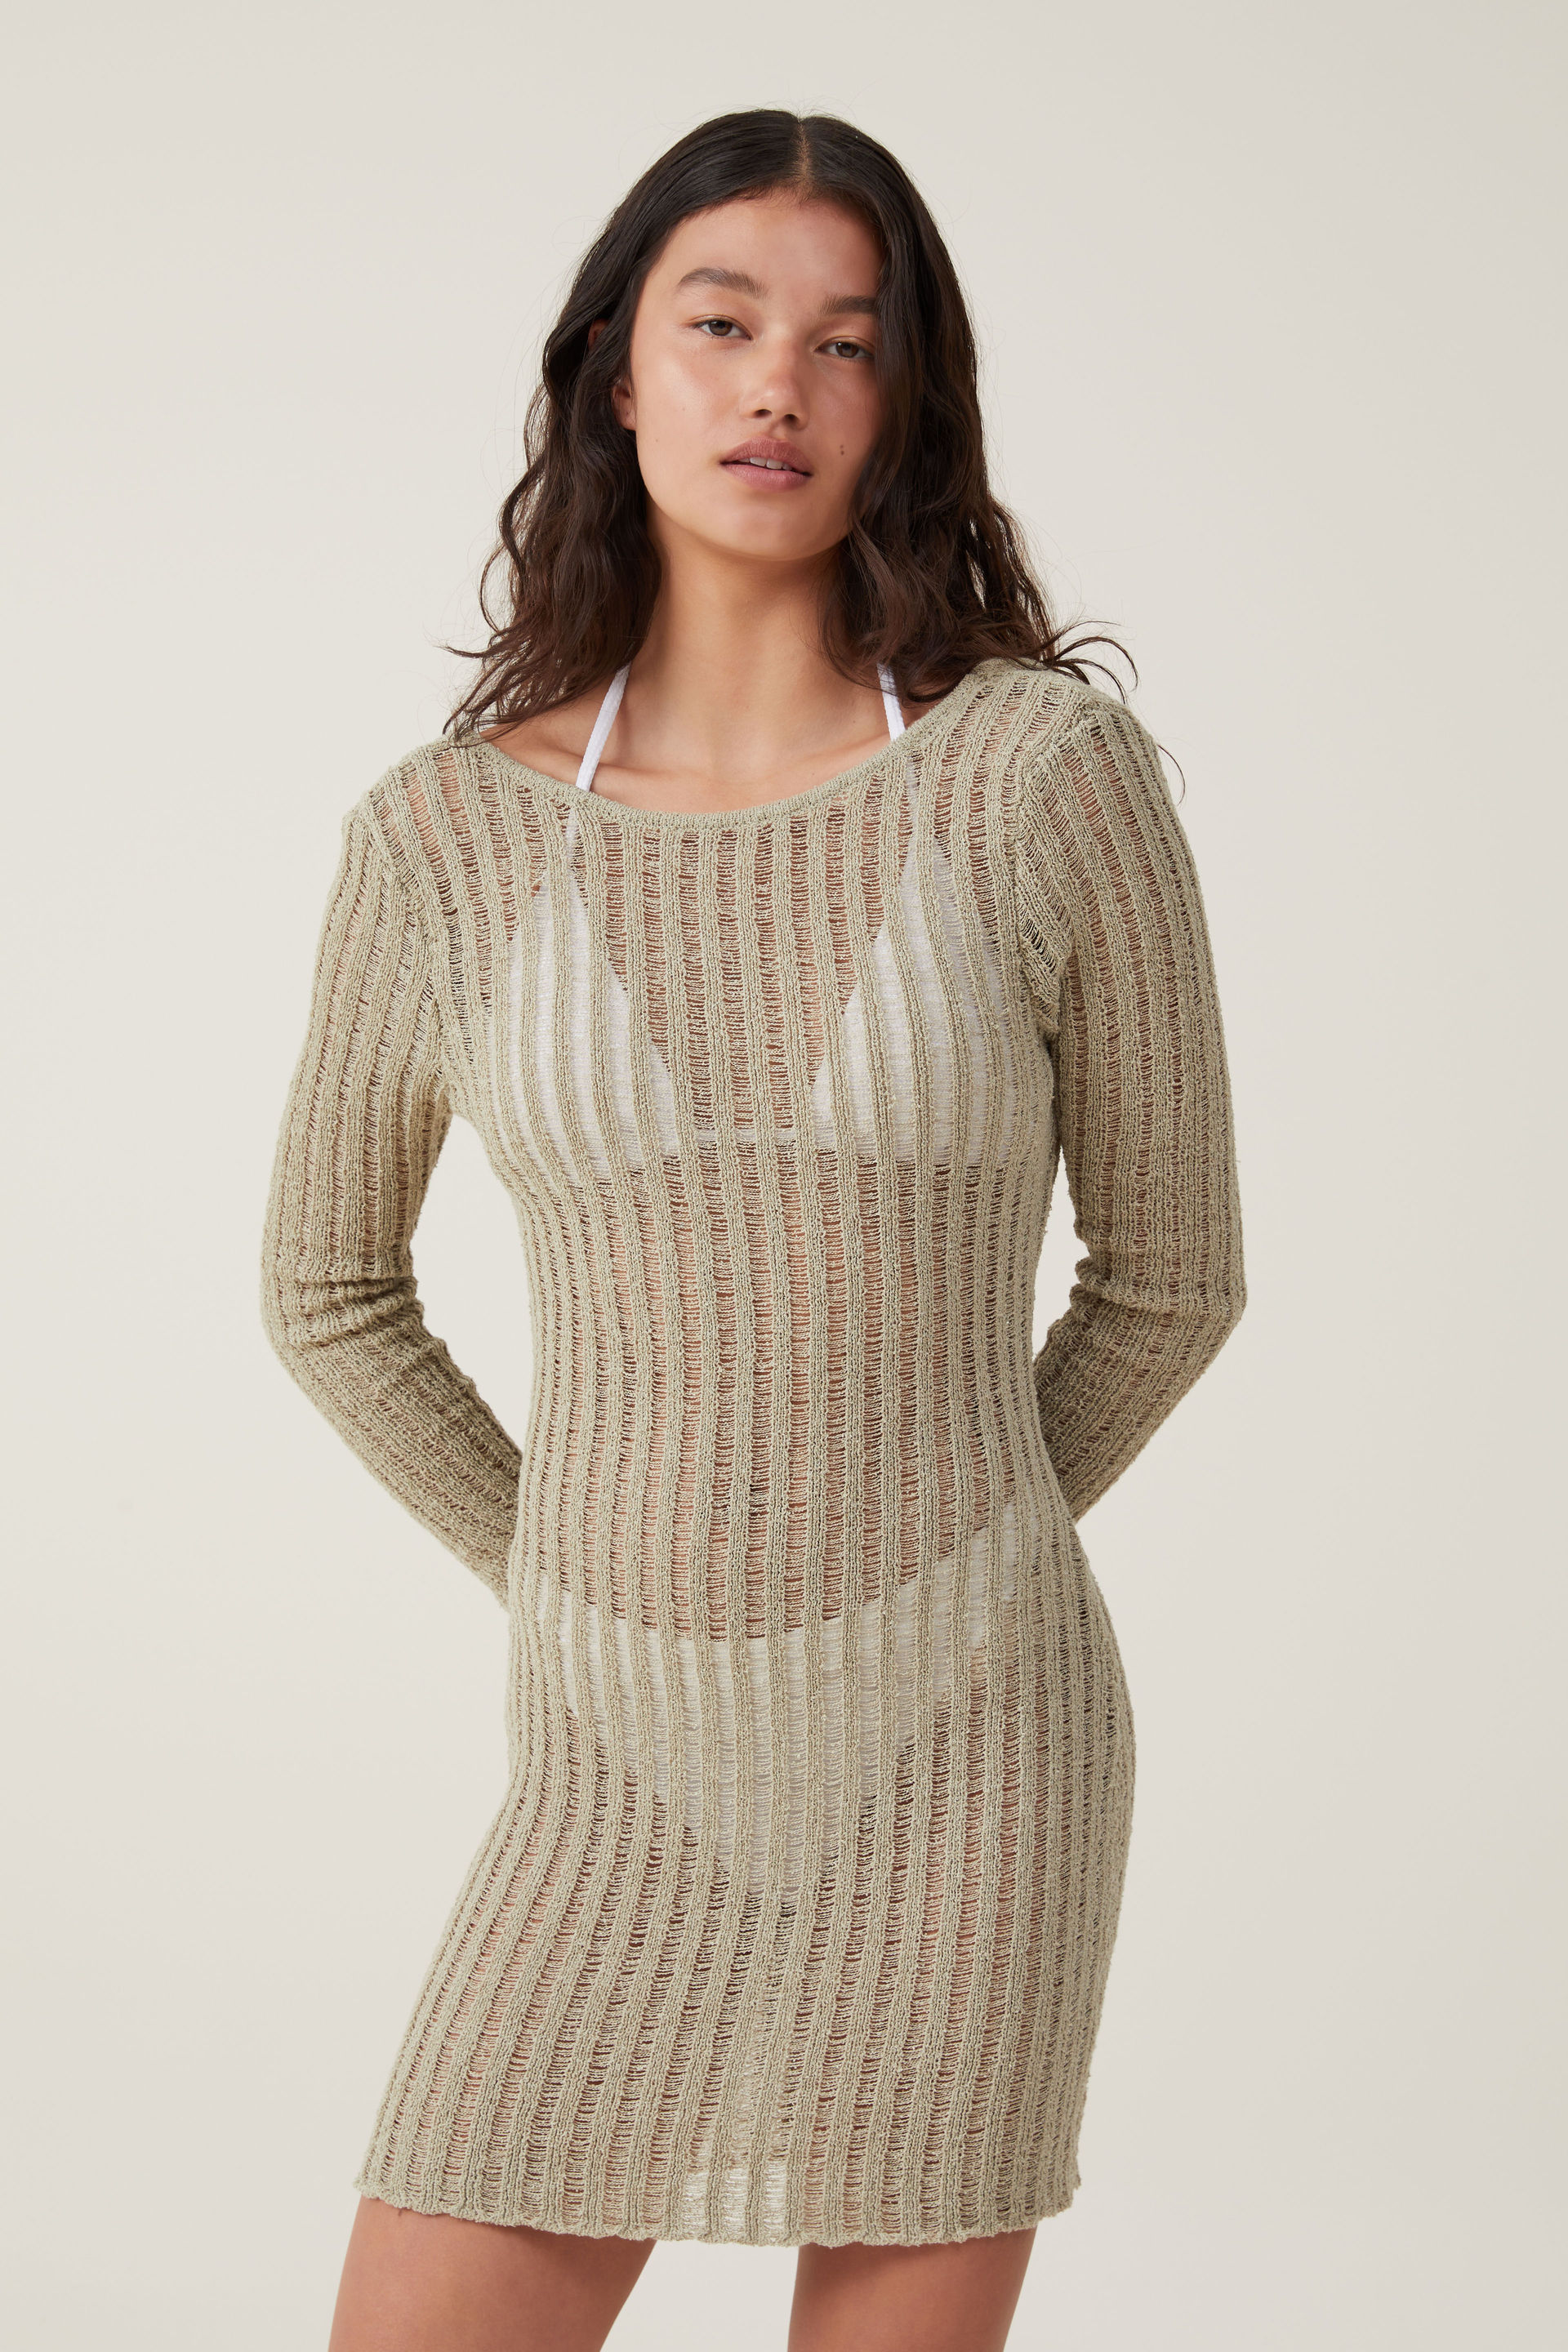 Cotton On Women - Ladder Knit Mini Dress - Desert sage